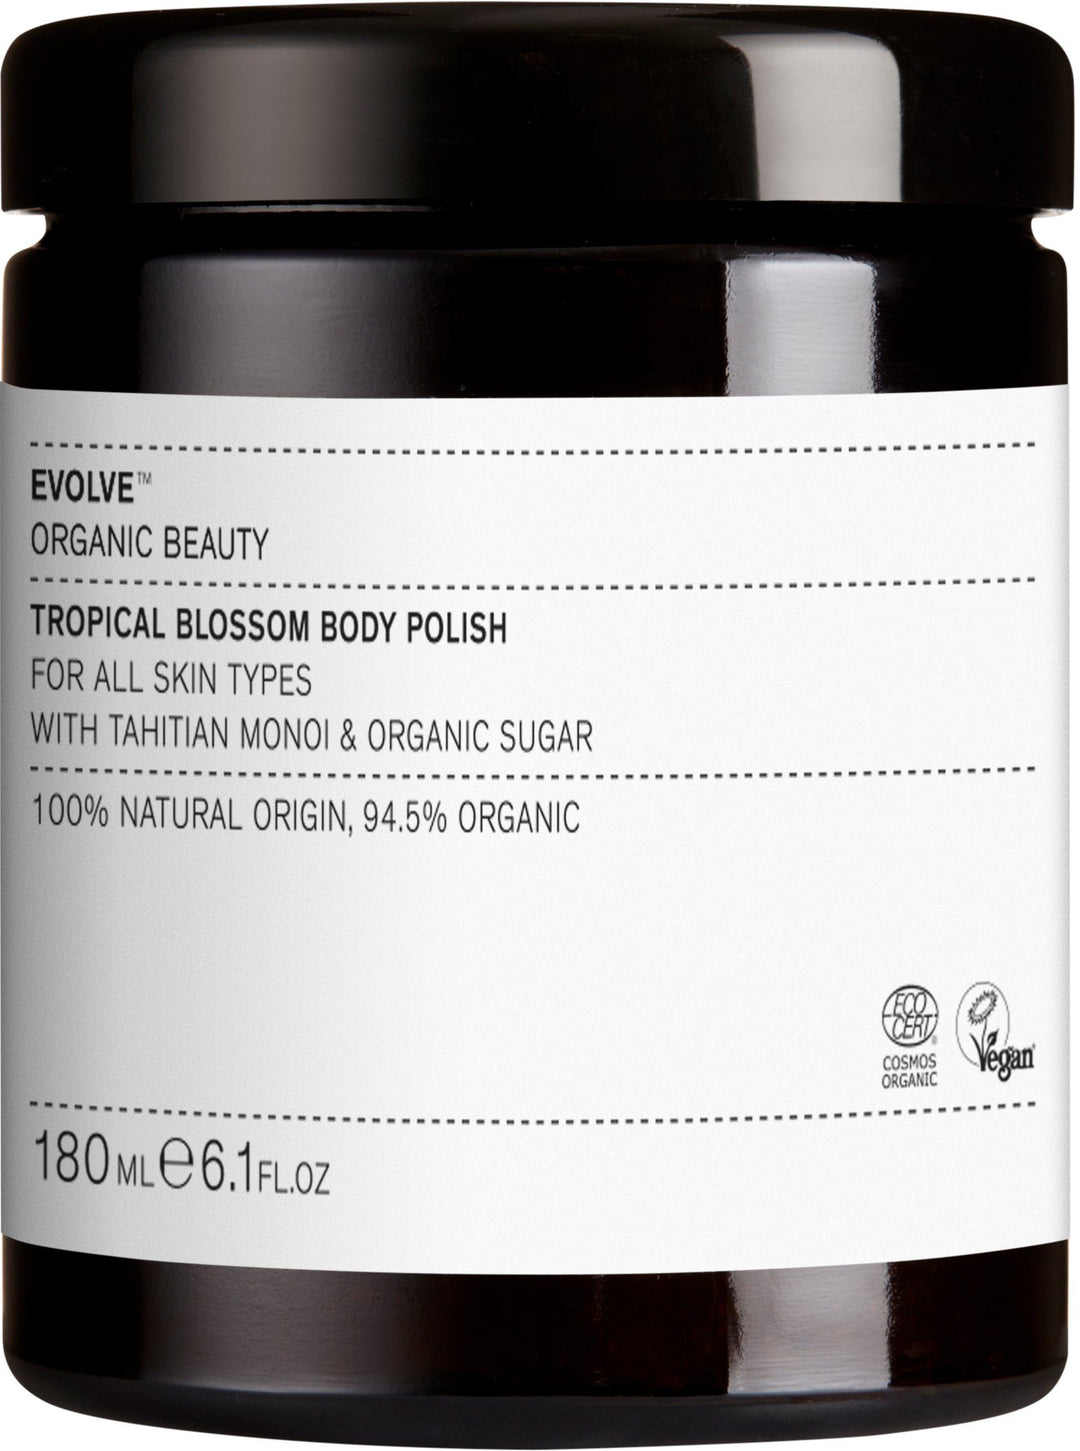 Evolve - Tropical Blossom Body Polish - 180 ml Creme 